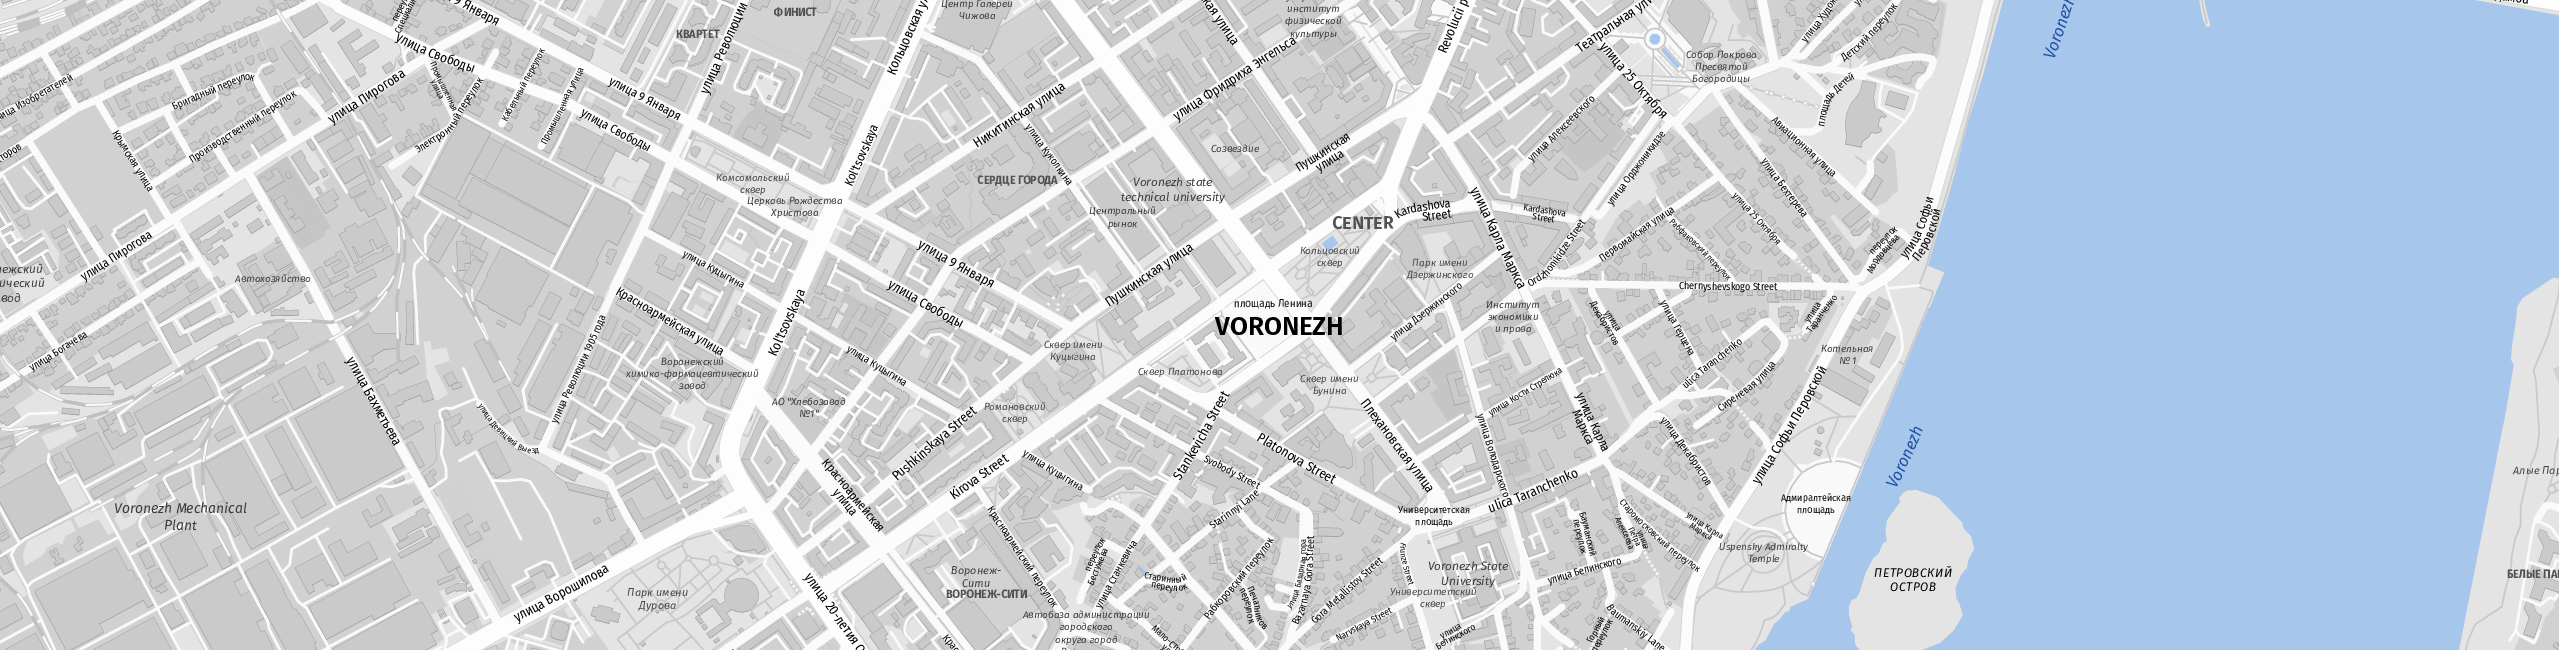 Stadtplan Voronezh zum Downloaden.